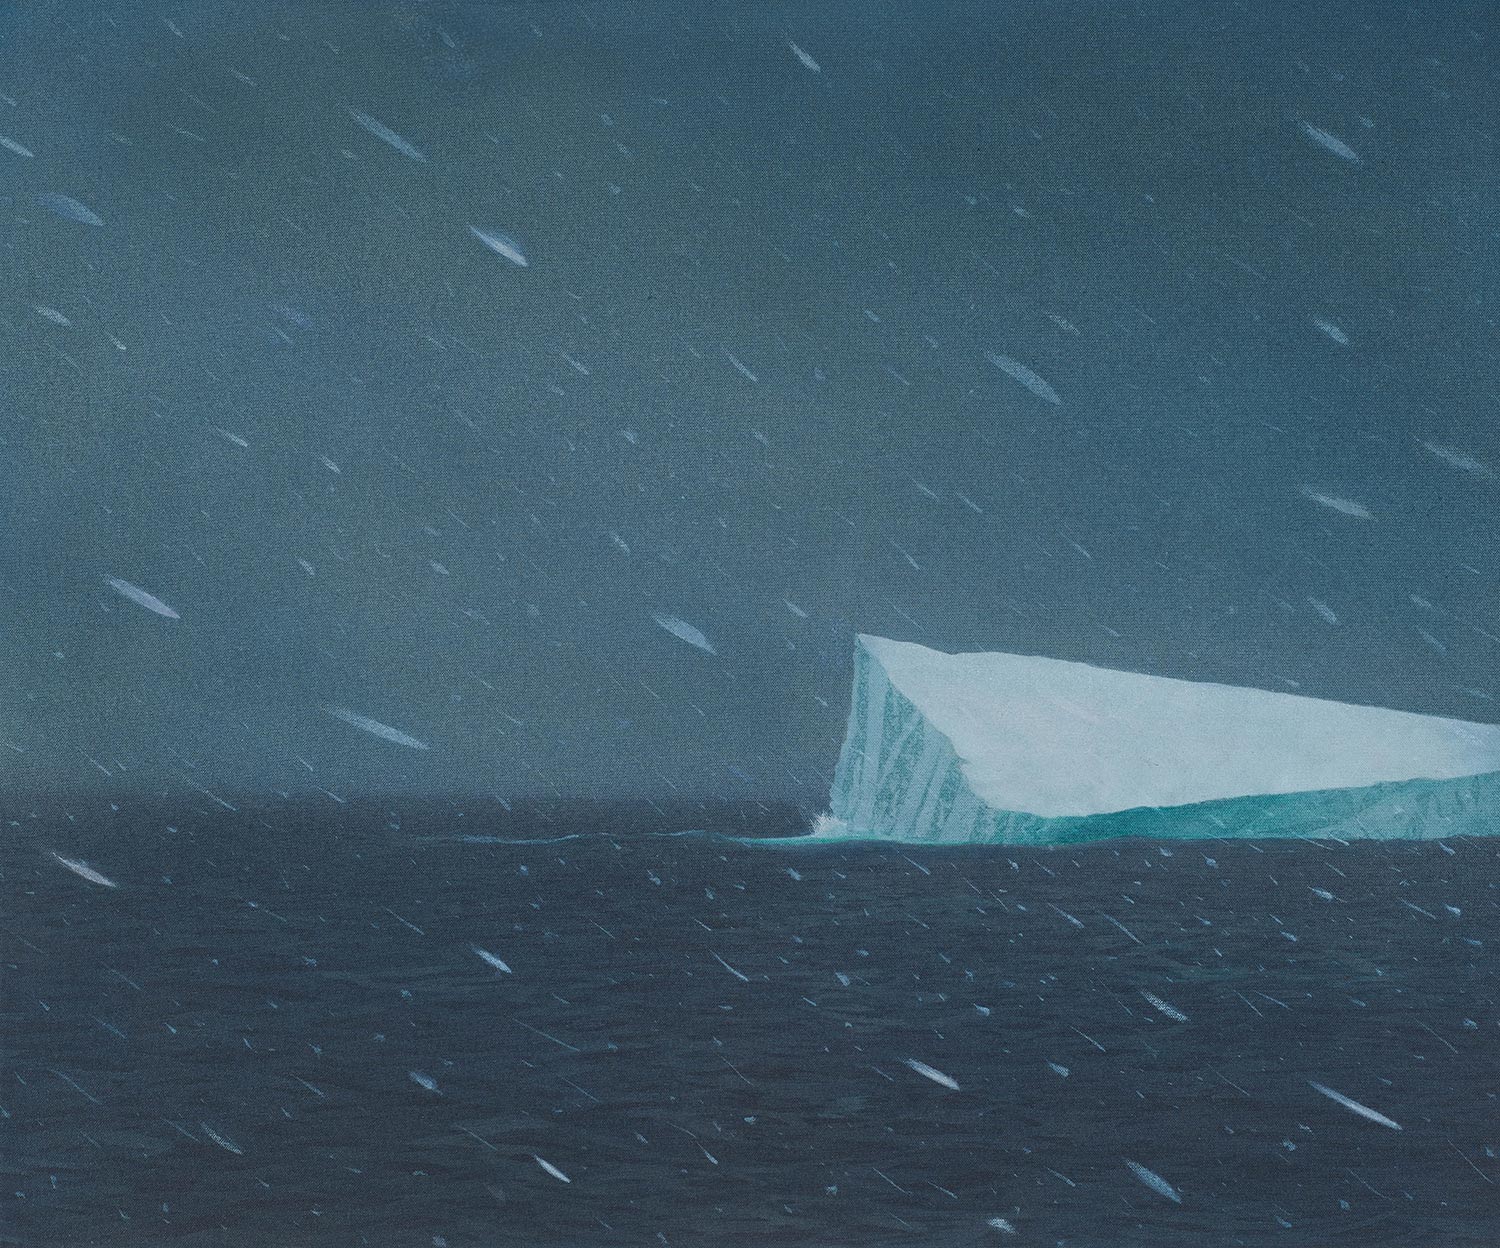 Nicholas-Jones-Snow-Falling-at-Sea-Twilight-2020-51-x-61cm